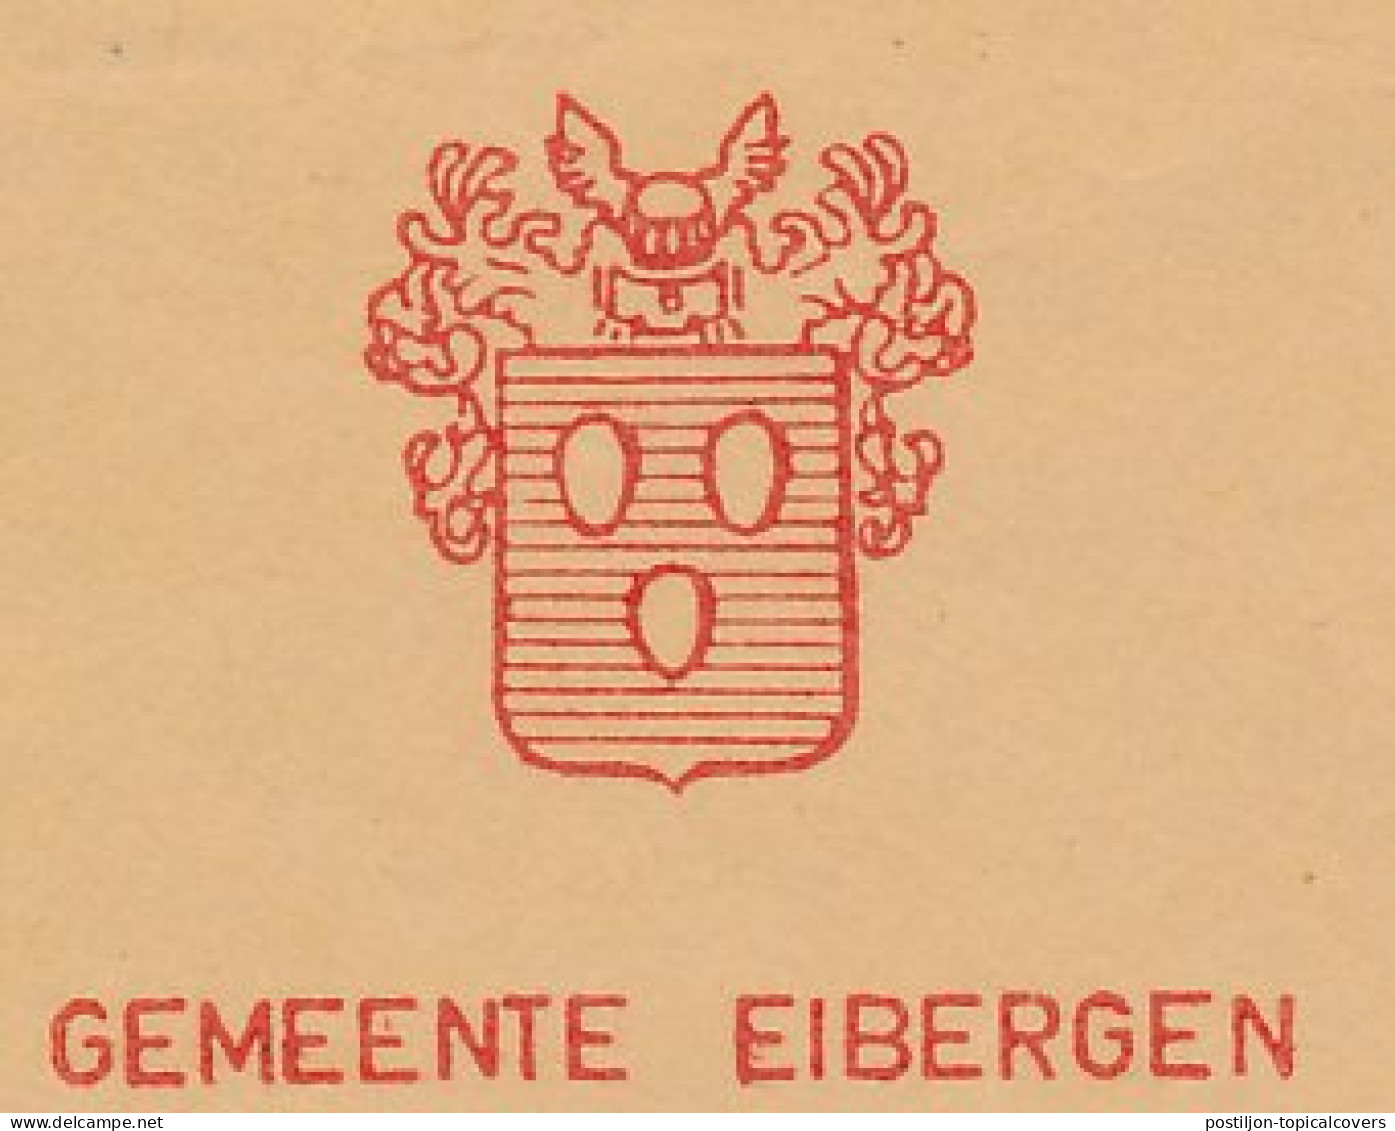 Meter Cover Netherlands 1963 Egg - Municipal Coat Of Arms Eibergen - Boerderij